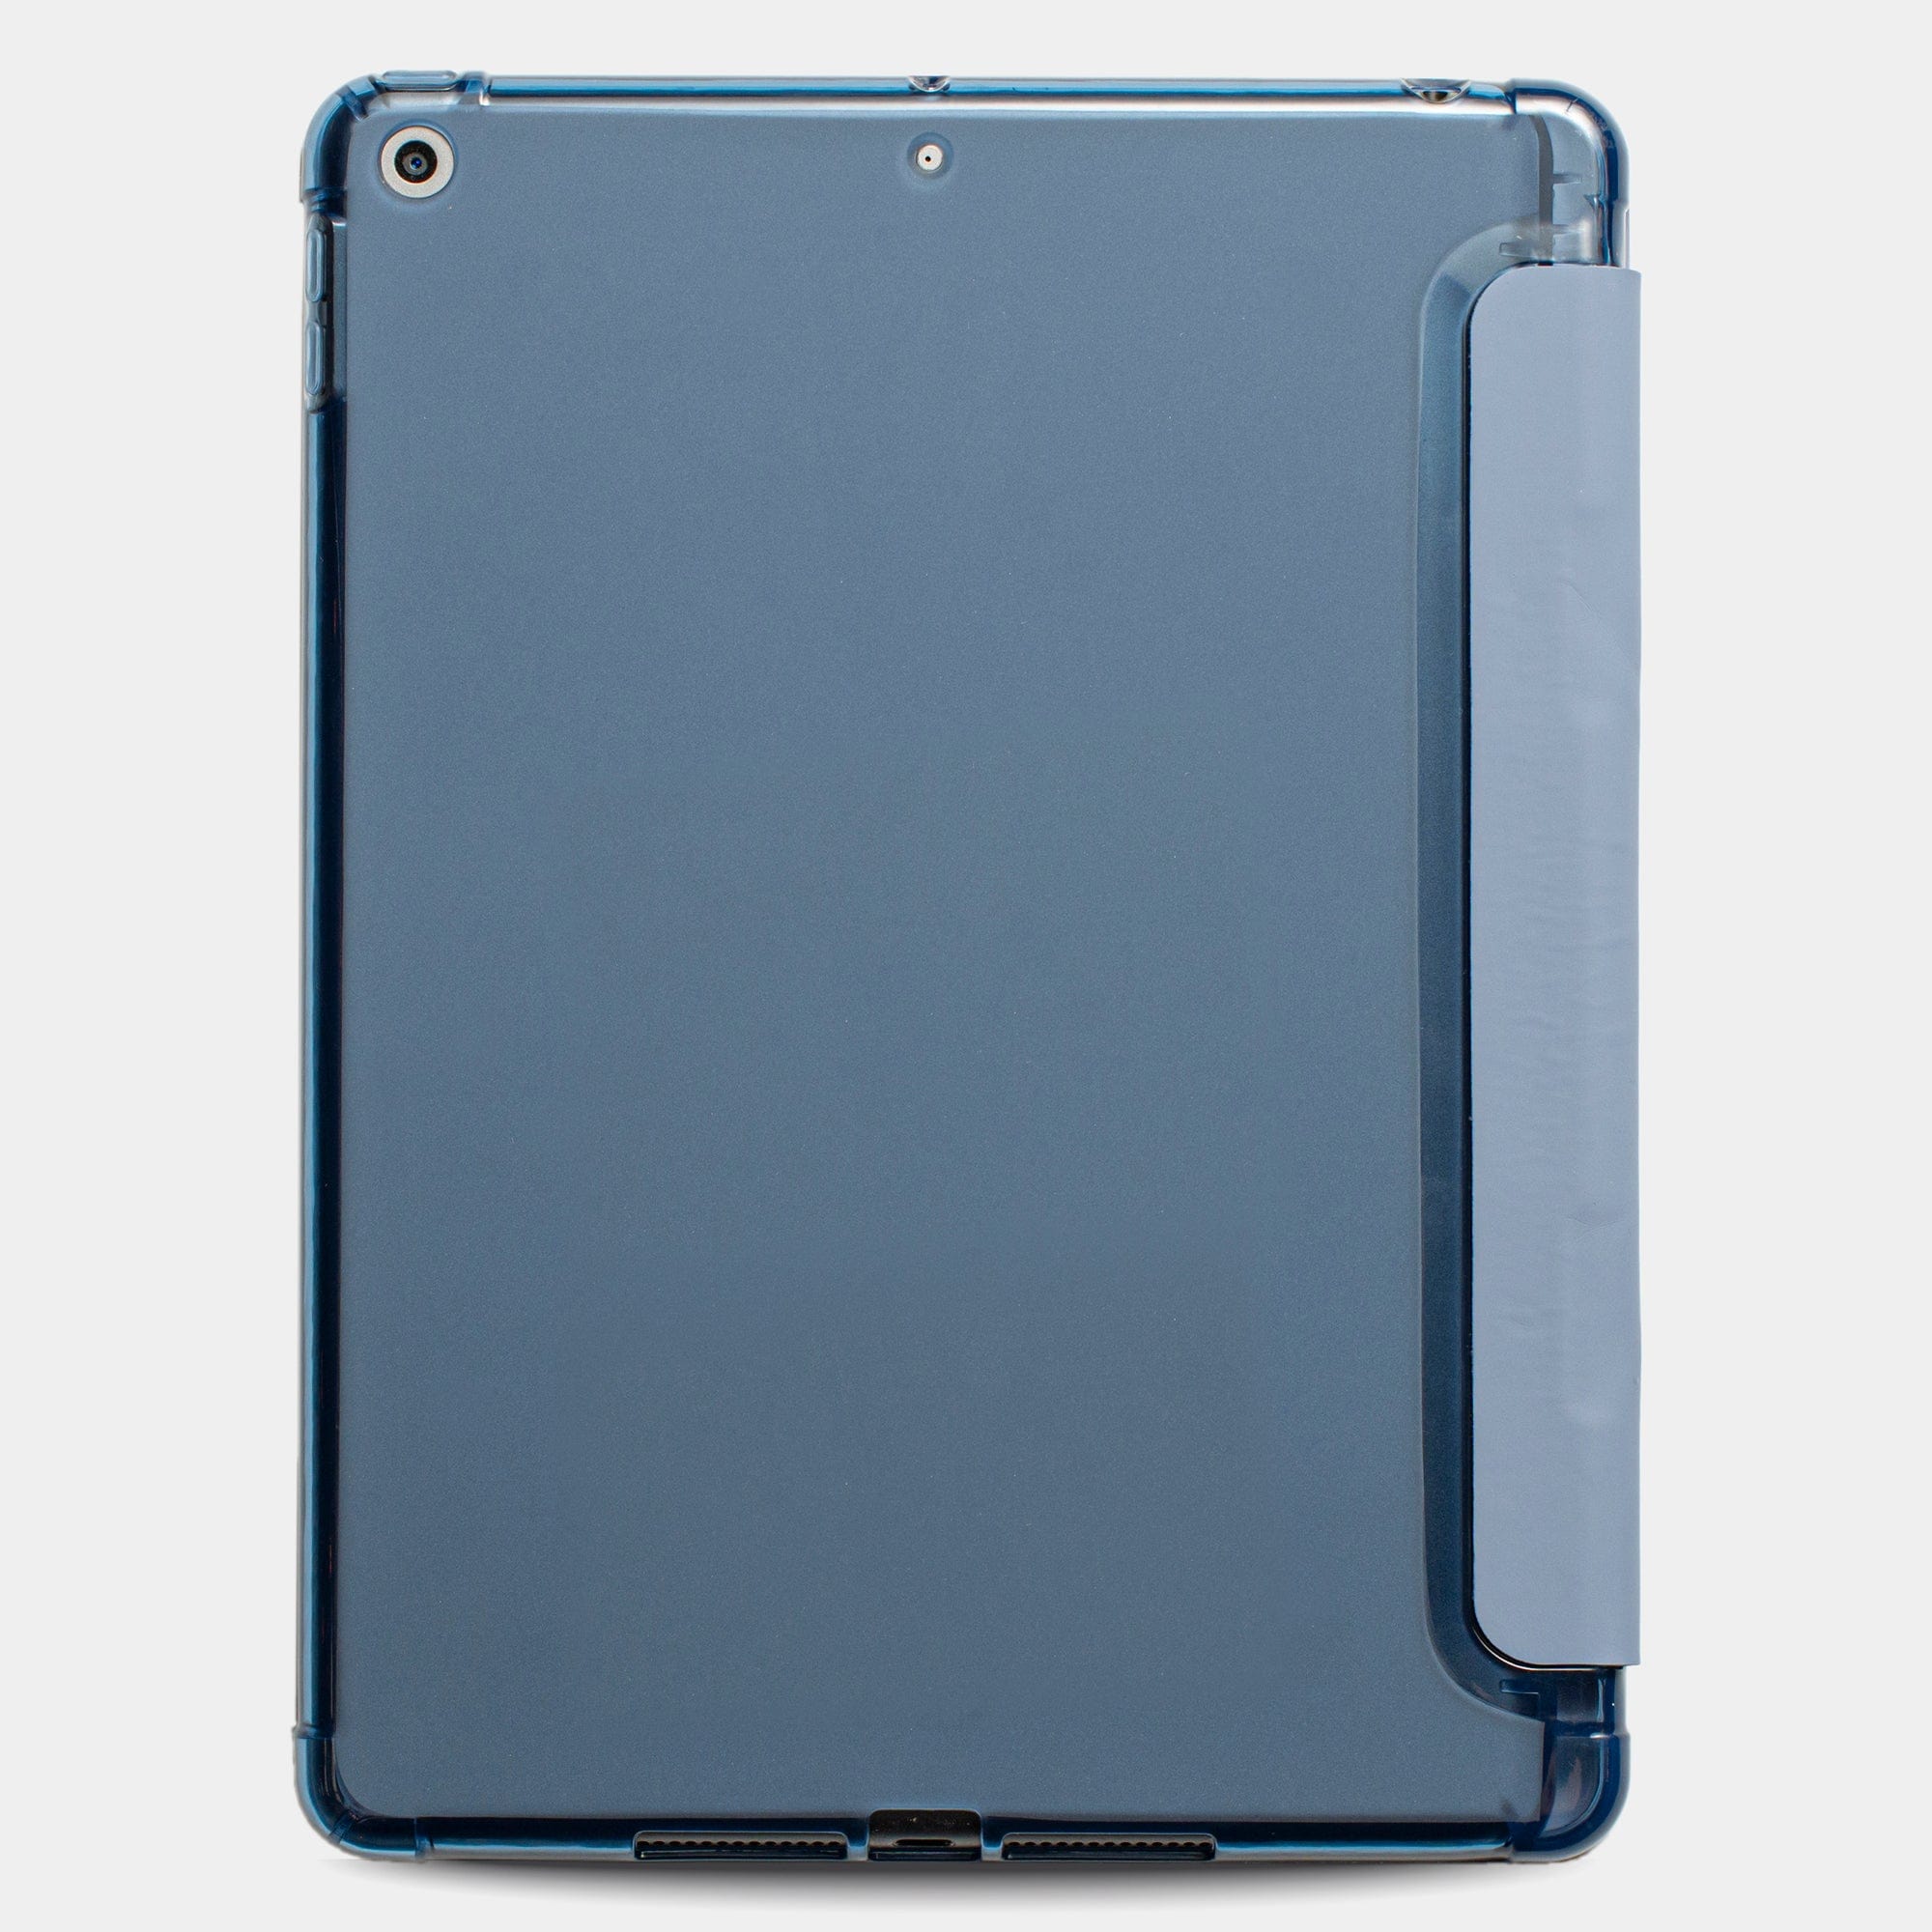 Comet iPad Personalized Case